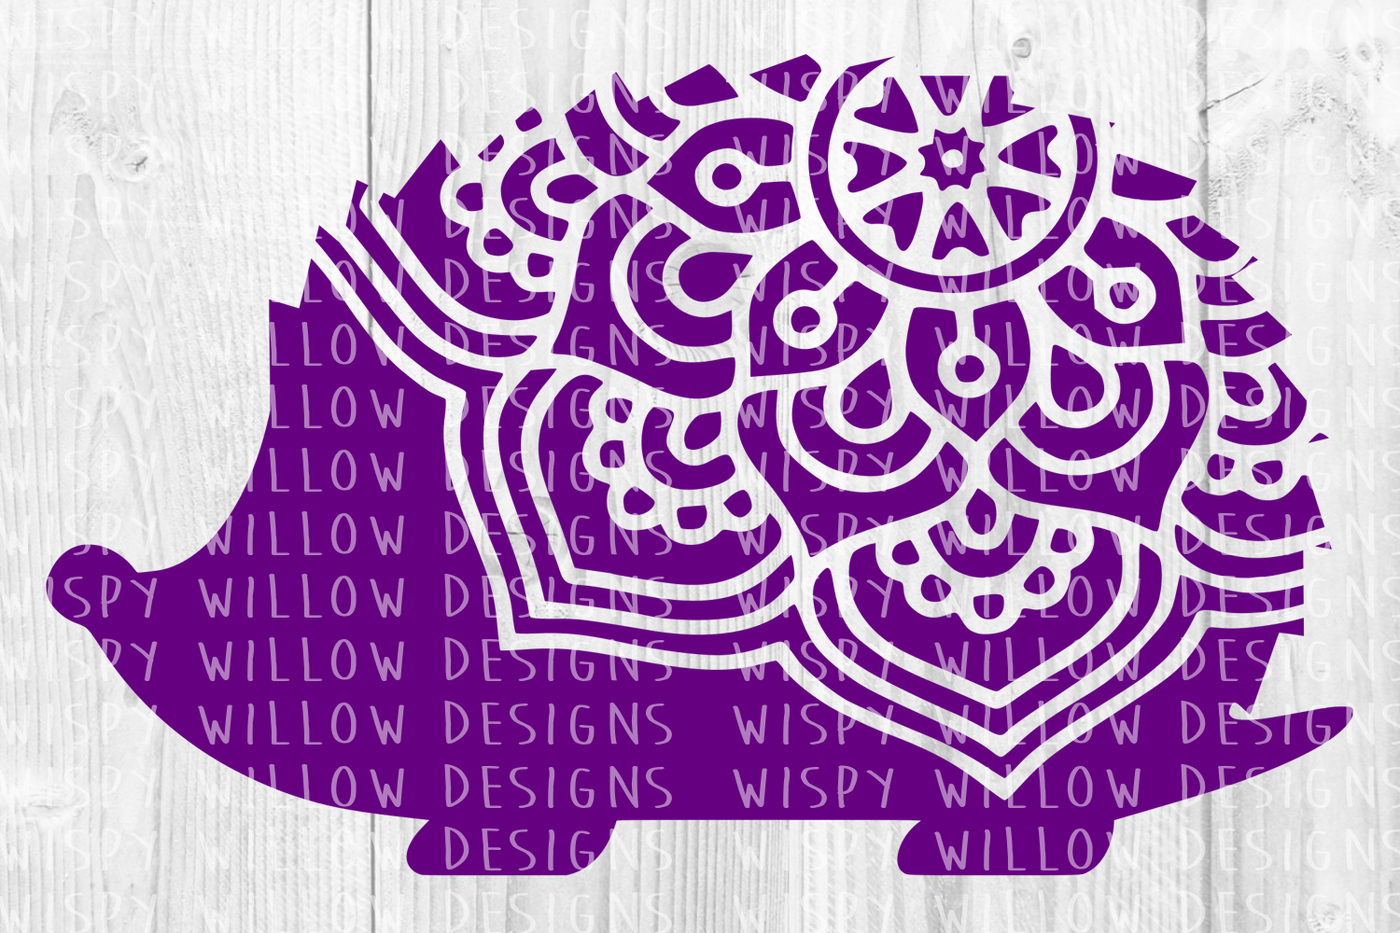 Download Hedgehog Mandala Svg Dxf Eps Png Jpg Pdf By Wispy Willow Designs Thehungryjpeg Com